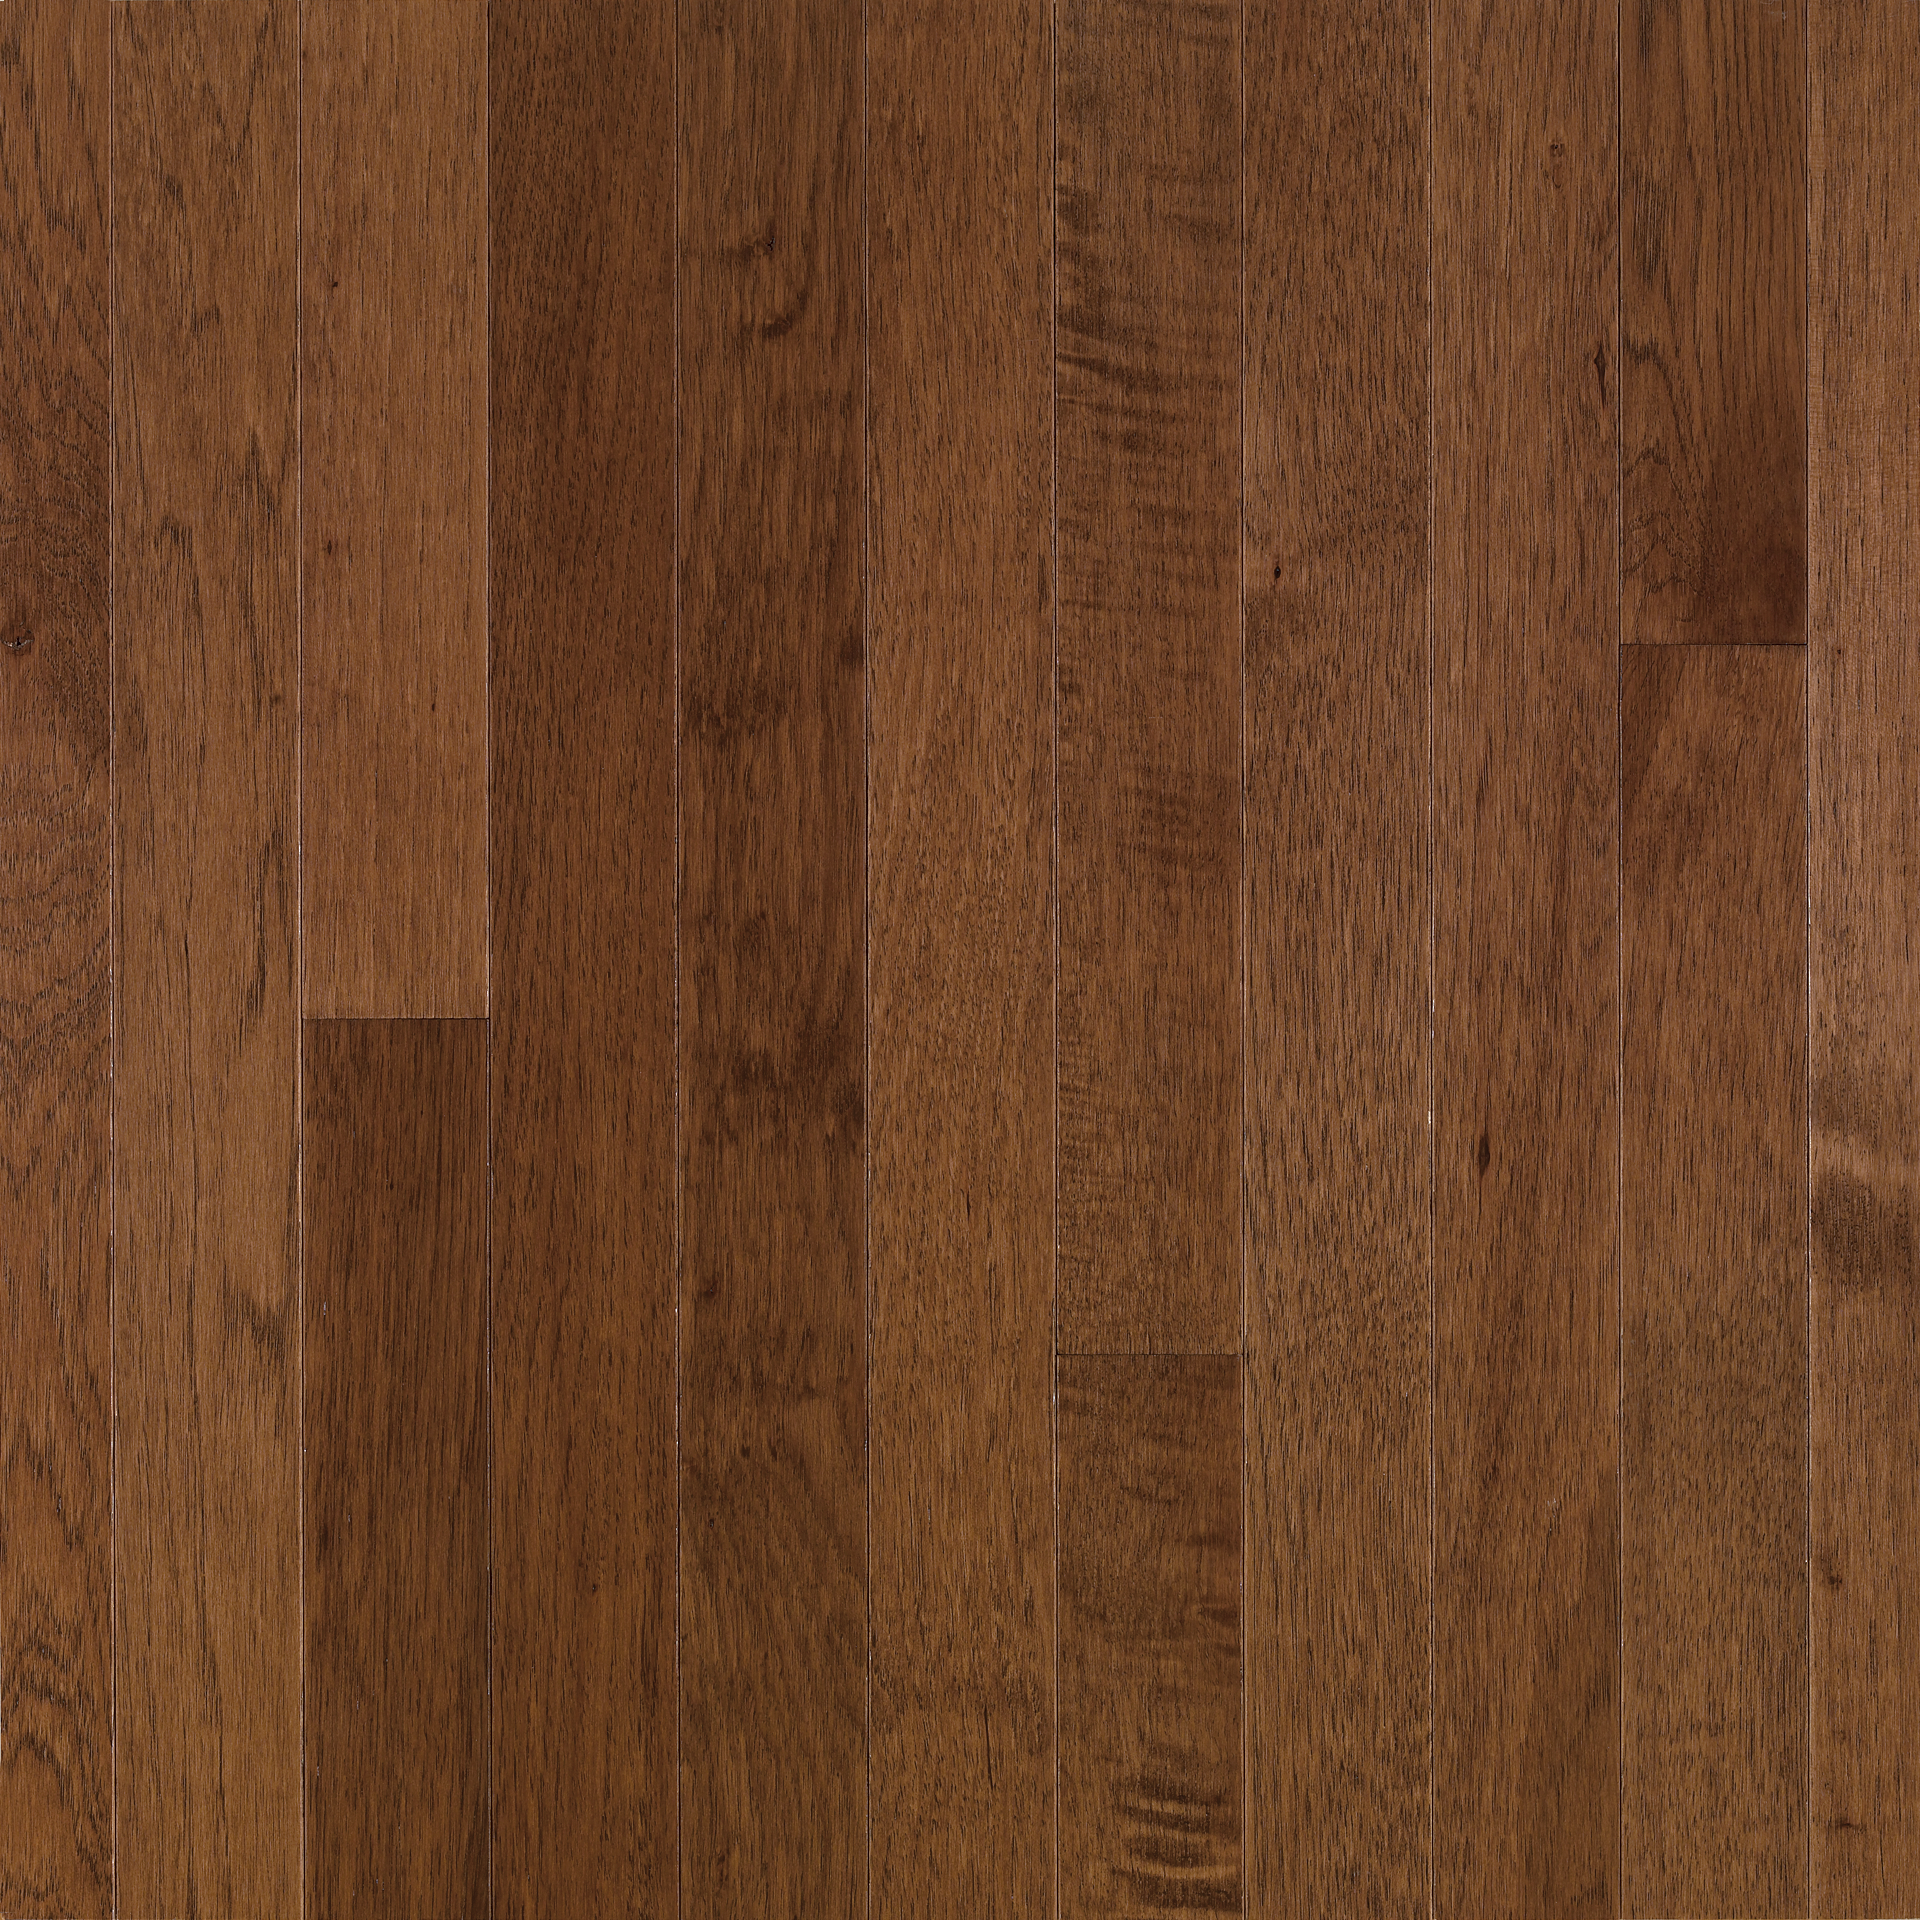 Hickory Solid Hardwood C0788, Distressed Brown Hickory Hardwood Flooring